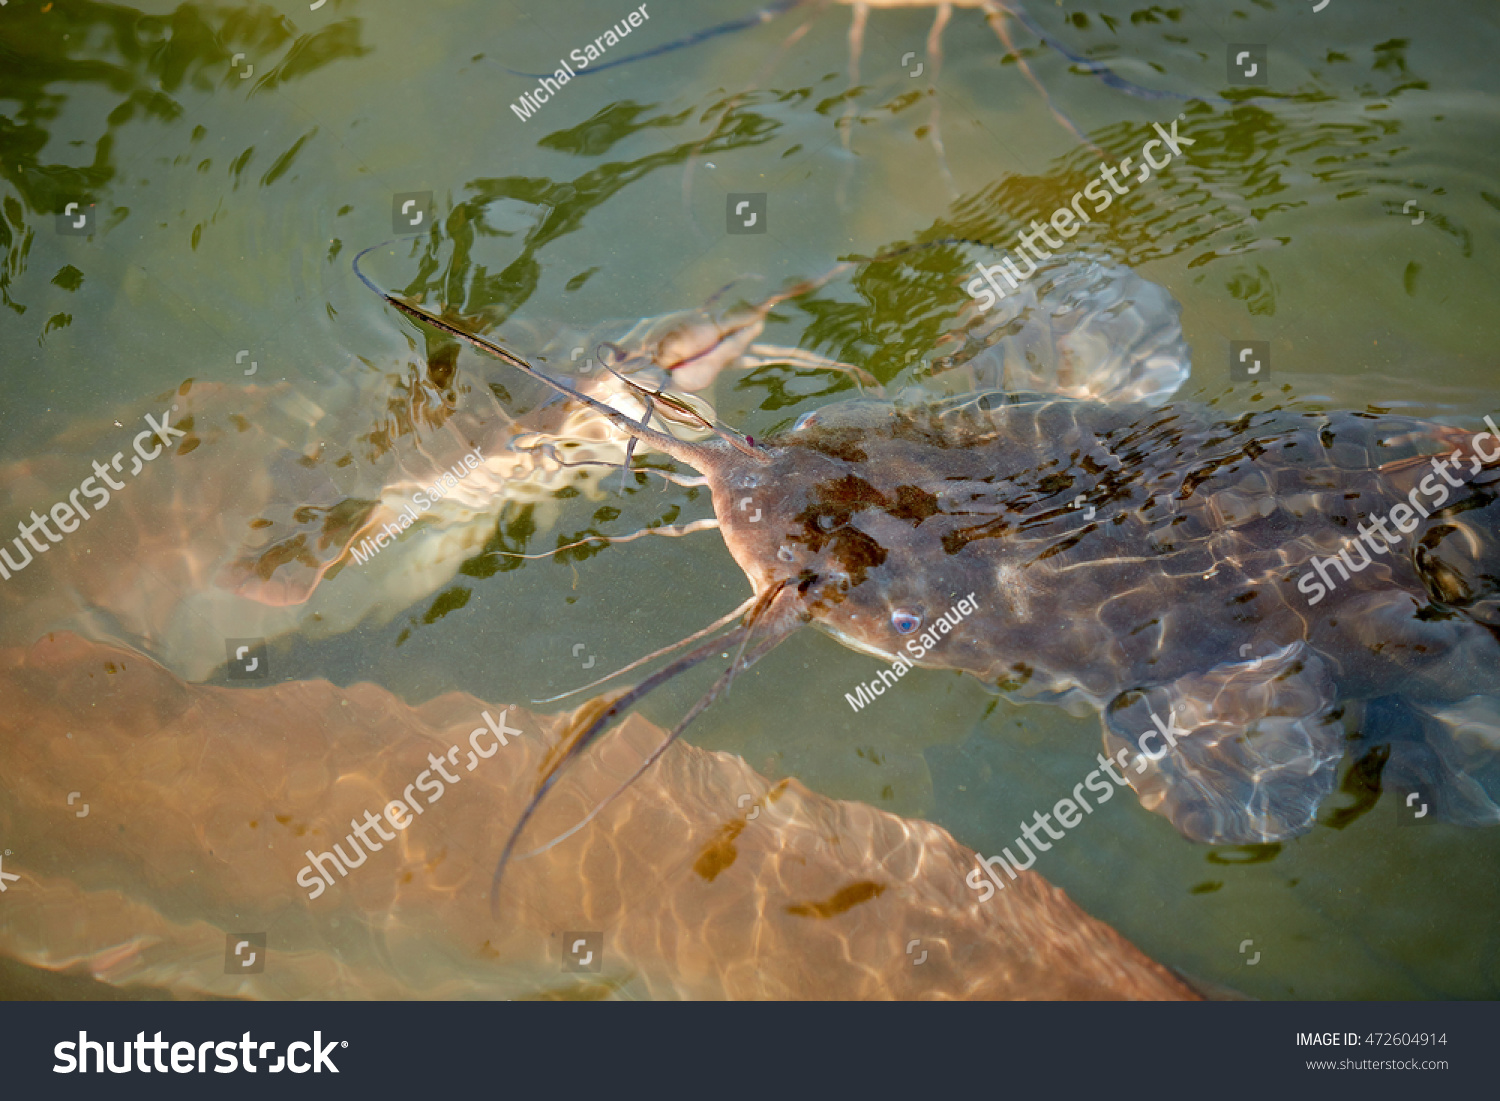 Cerebrum speech basic Catfish Sheatfish Jordan River Israel Middle Stock Photo 472604914 |  Shutterstock